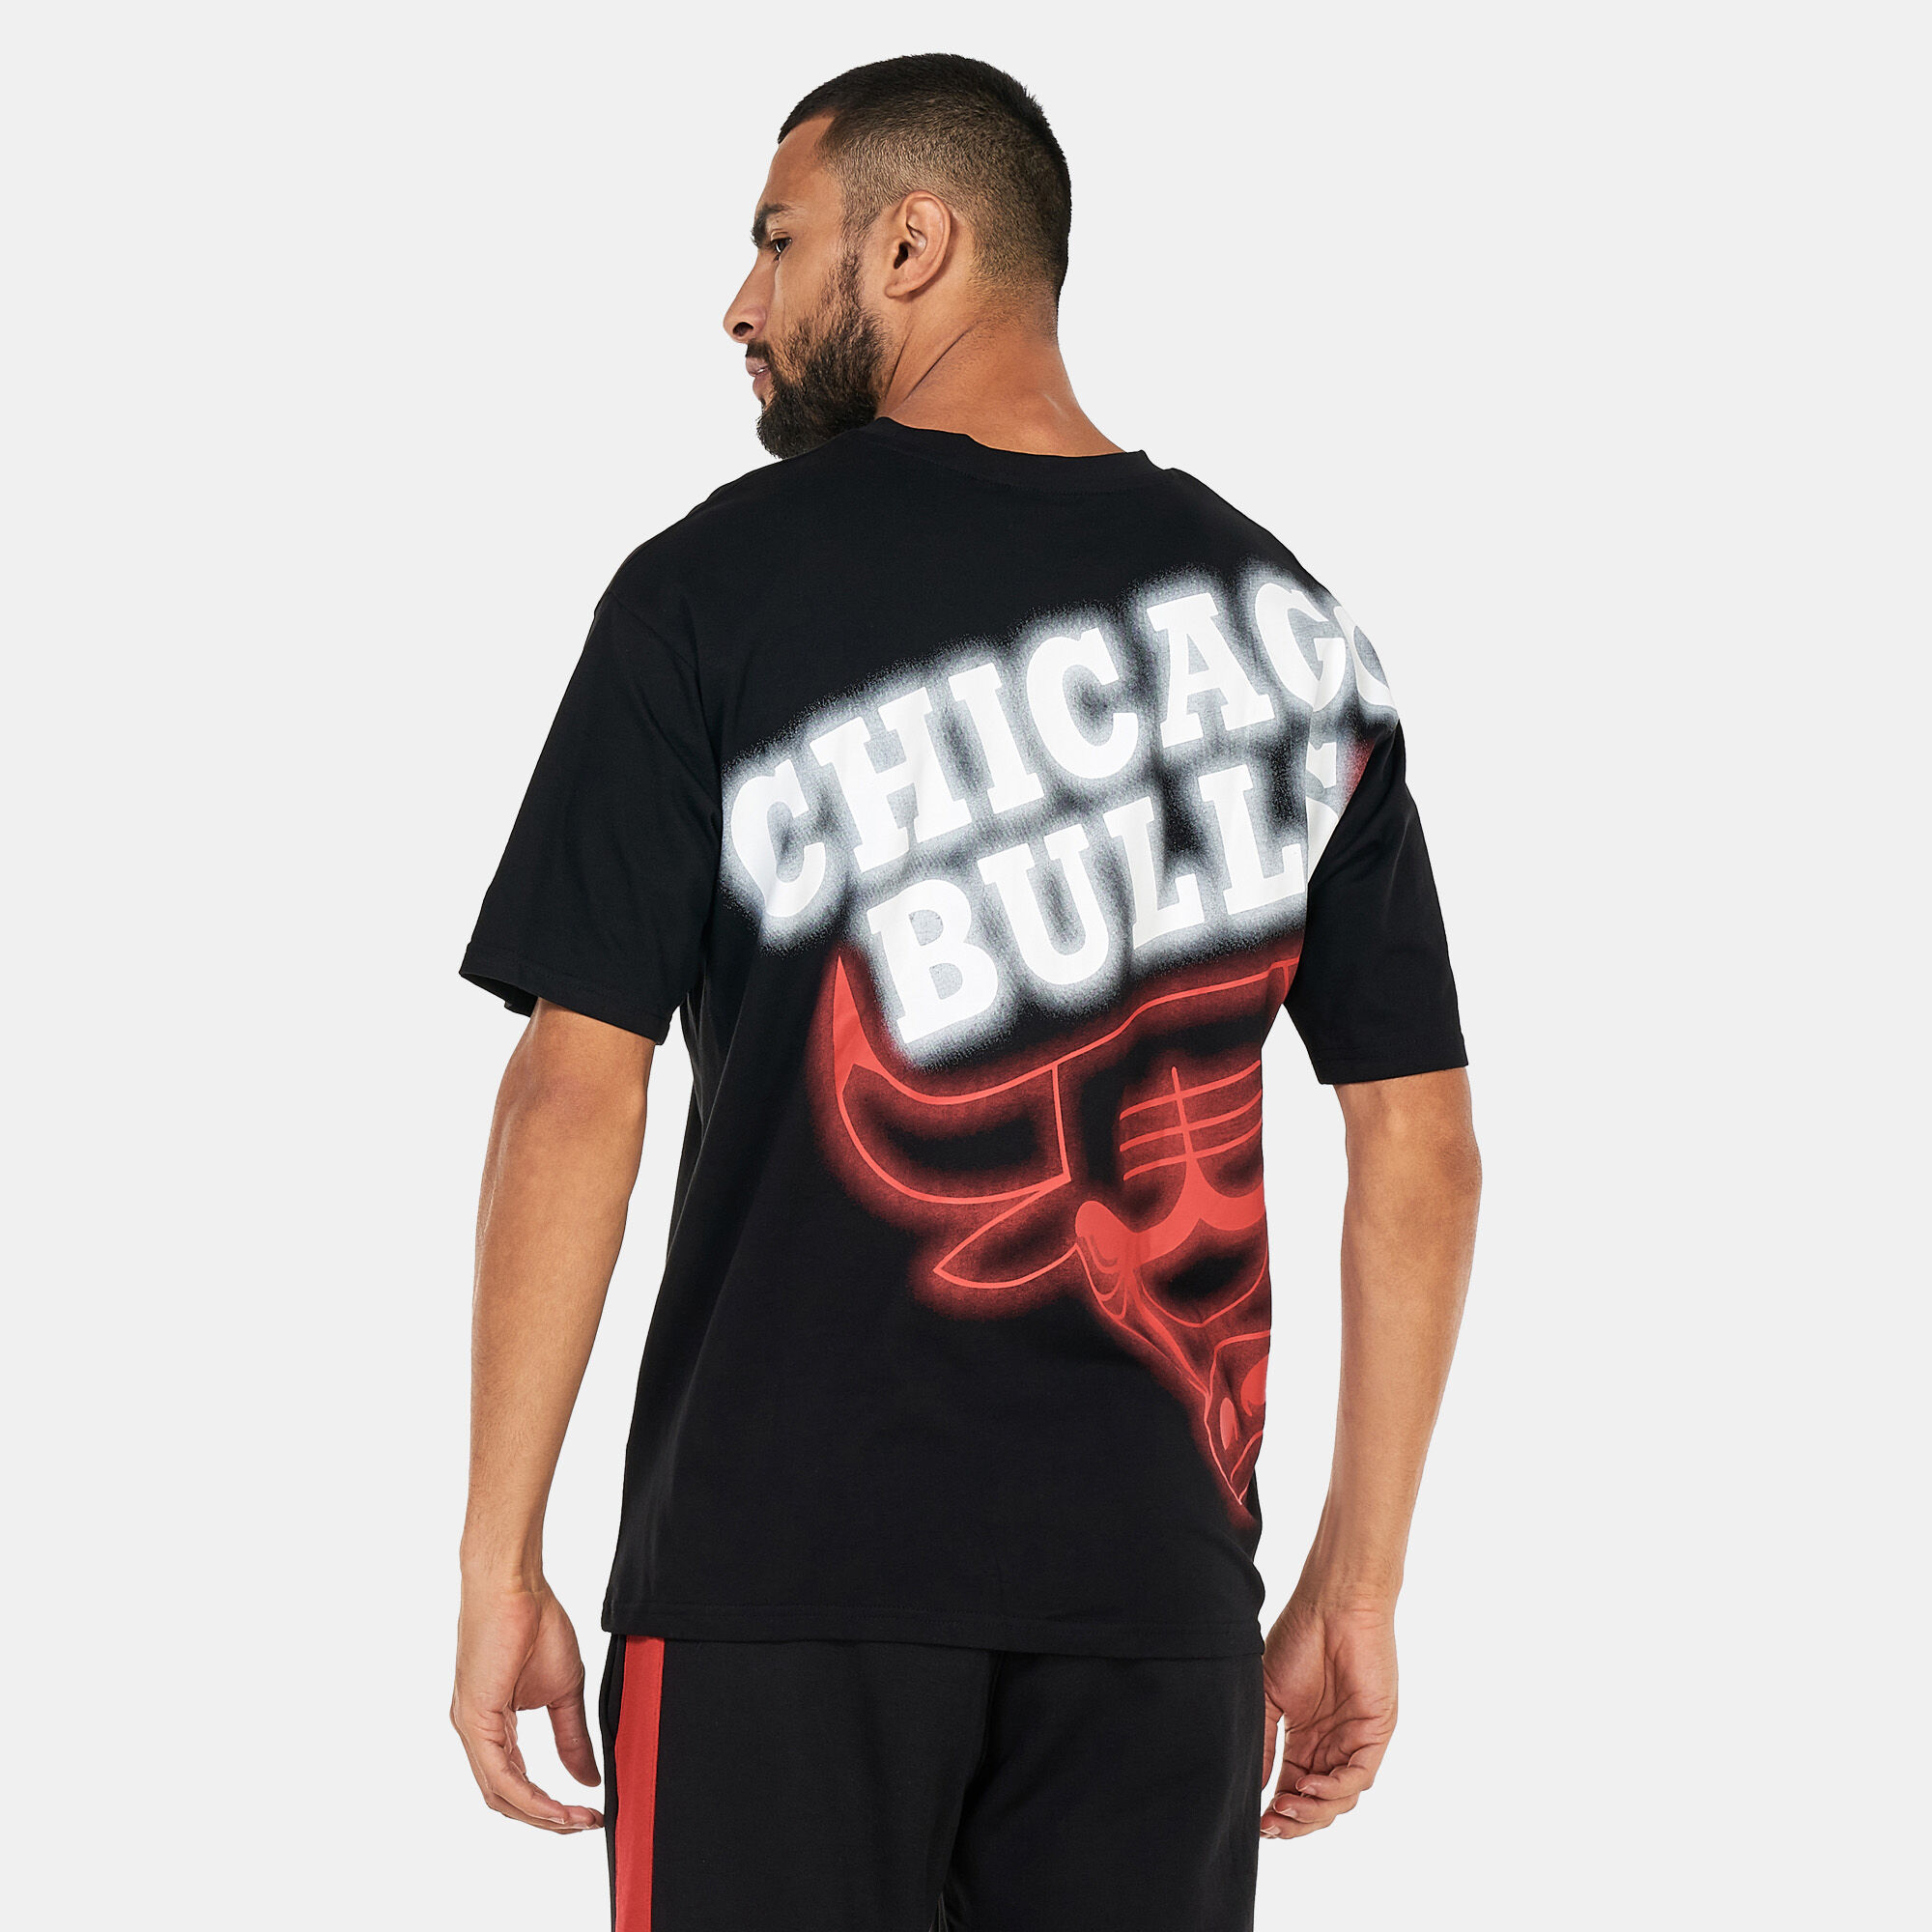 New Era Chicago Bulls City Graphic Oversized T-shirt Black 60416344